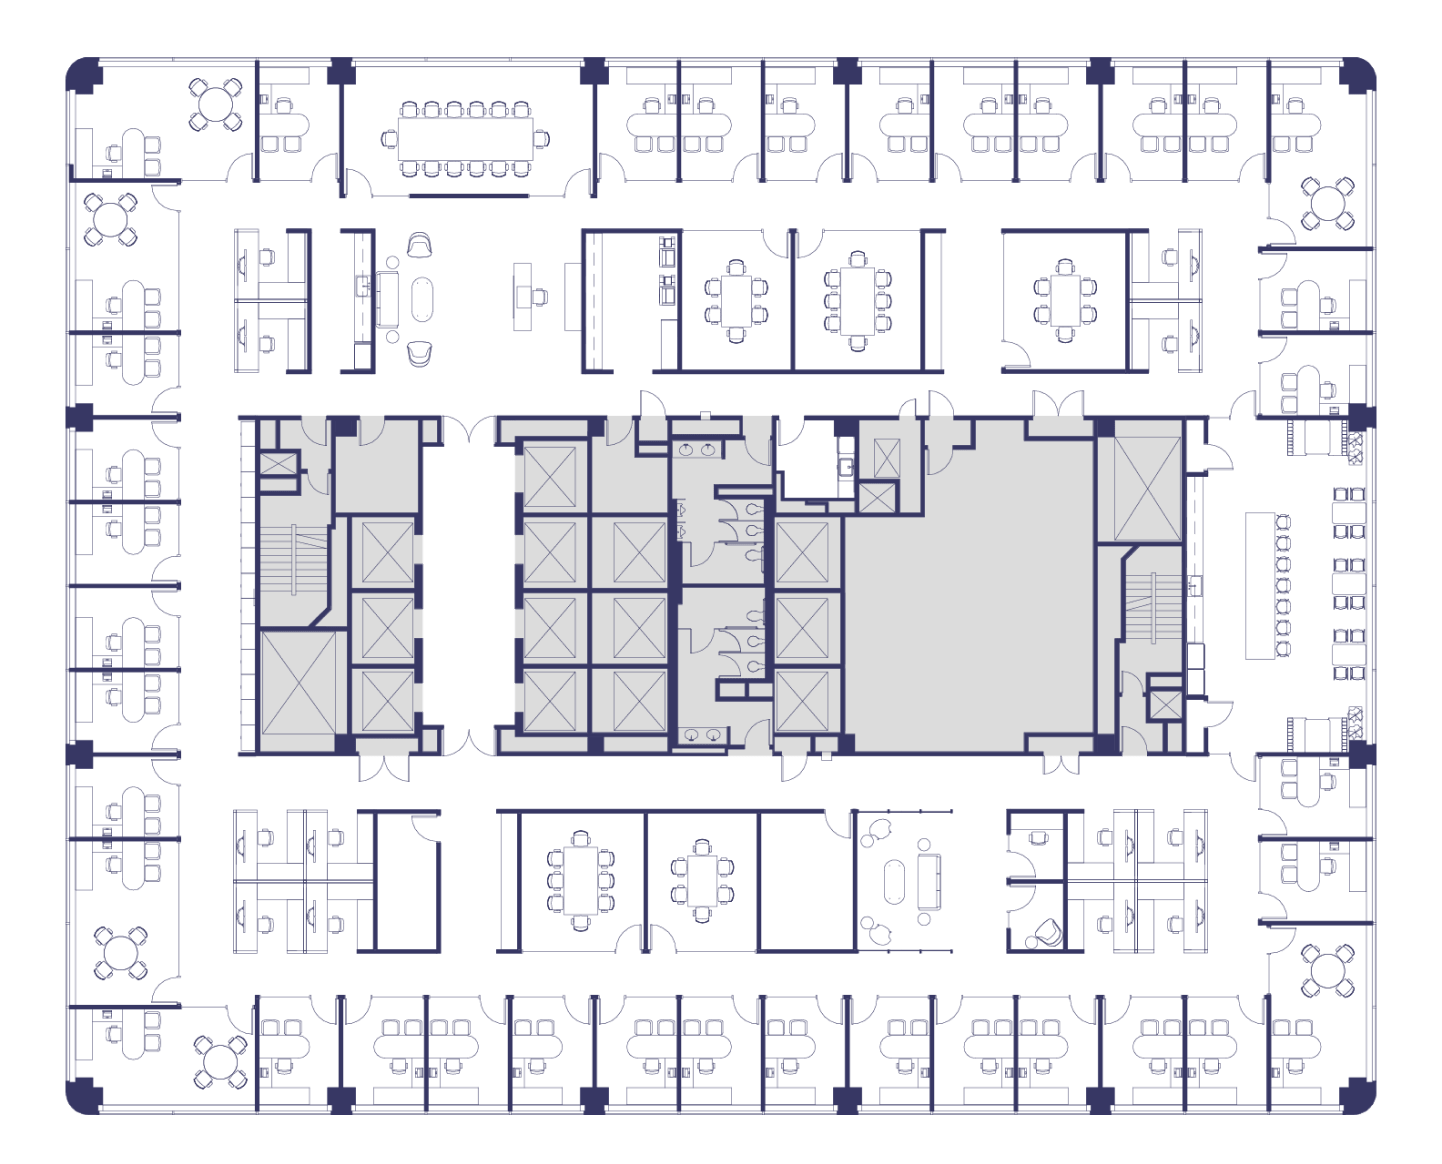 Floor 16 Suite 1600 Hypothetical Private Office Plan